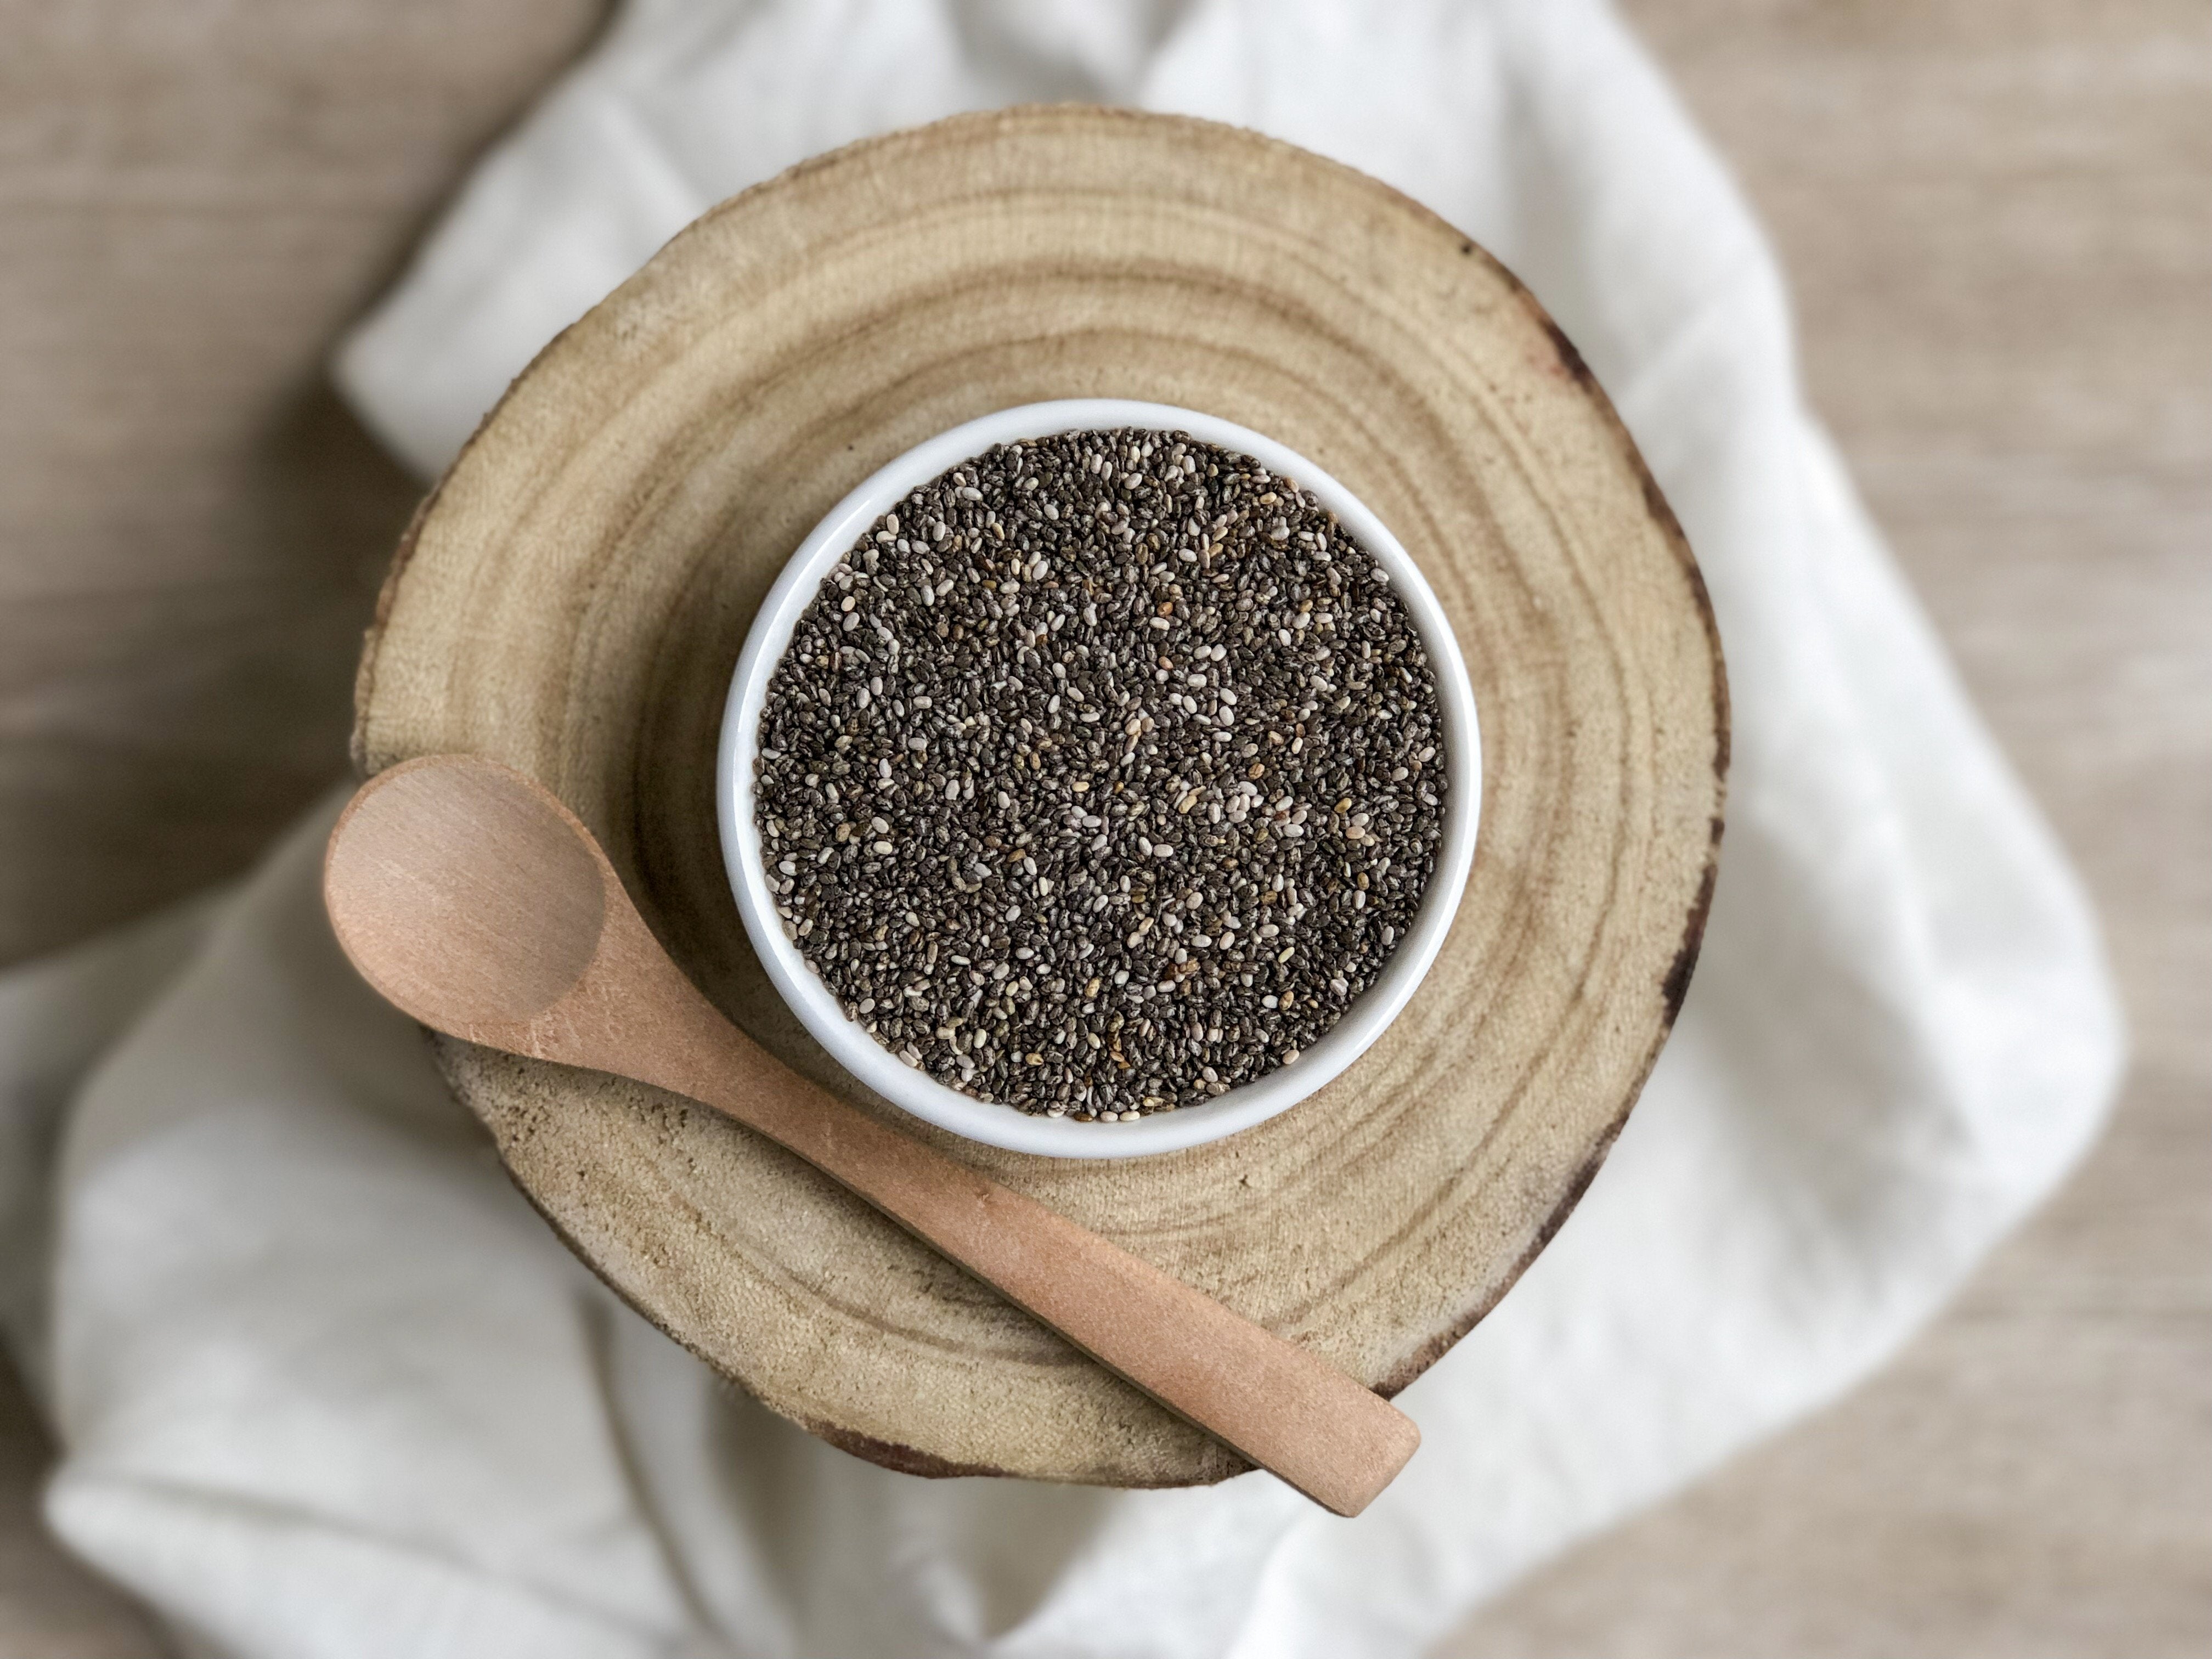 Organic Chia Seeds: Batch Tested & Verified Gluten-Free